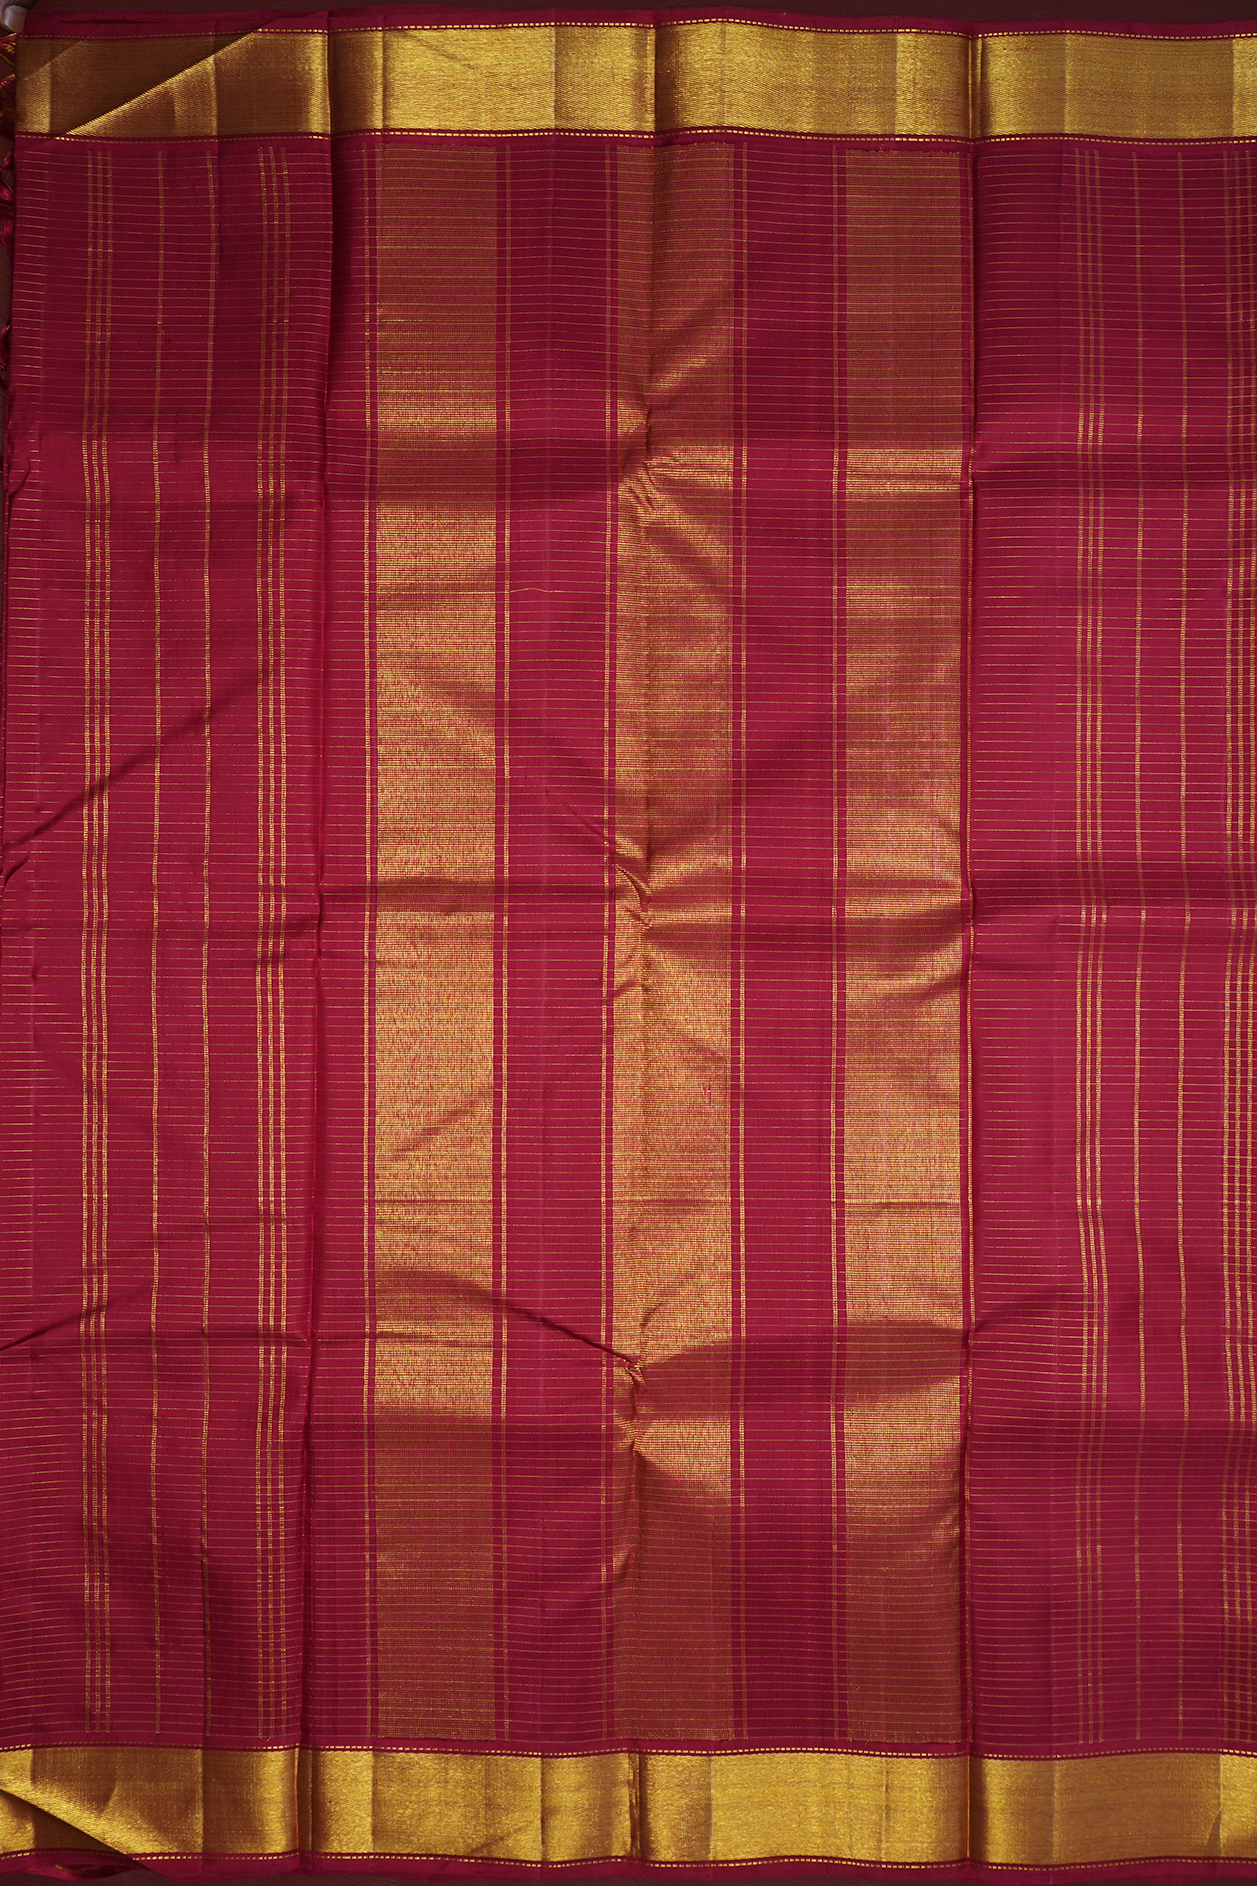 Zari Checked Design Ruby Red Kanchipuram Silk Saree